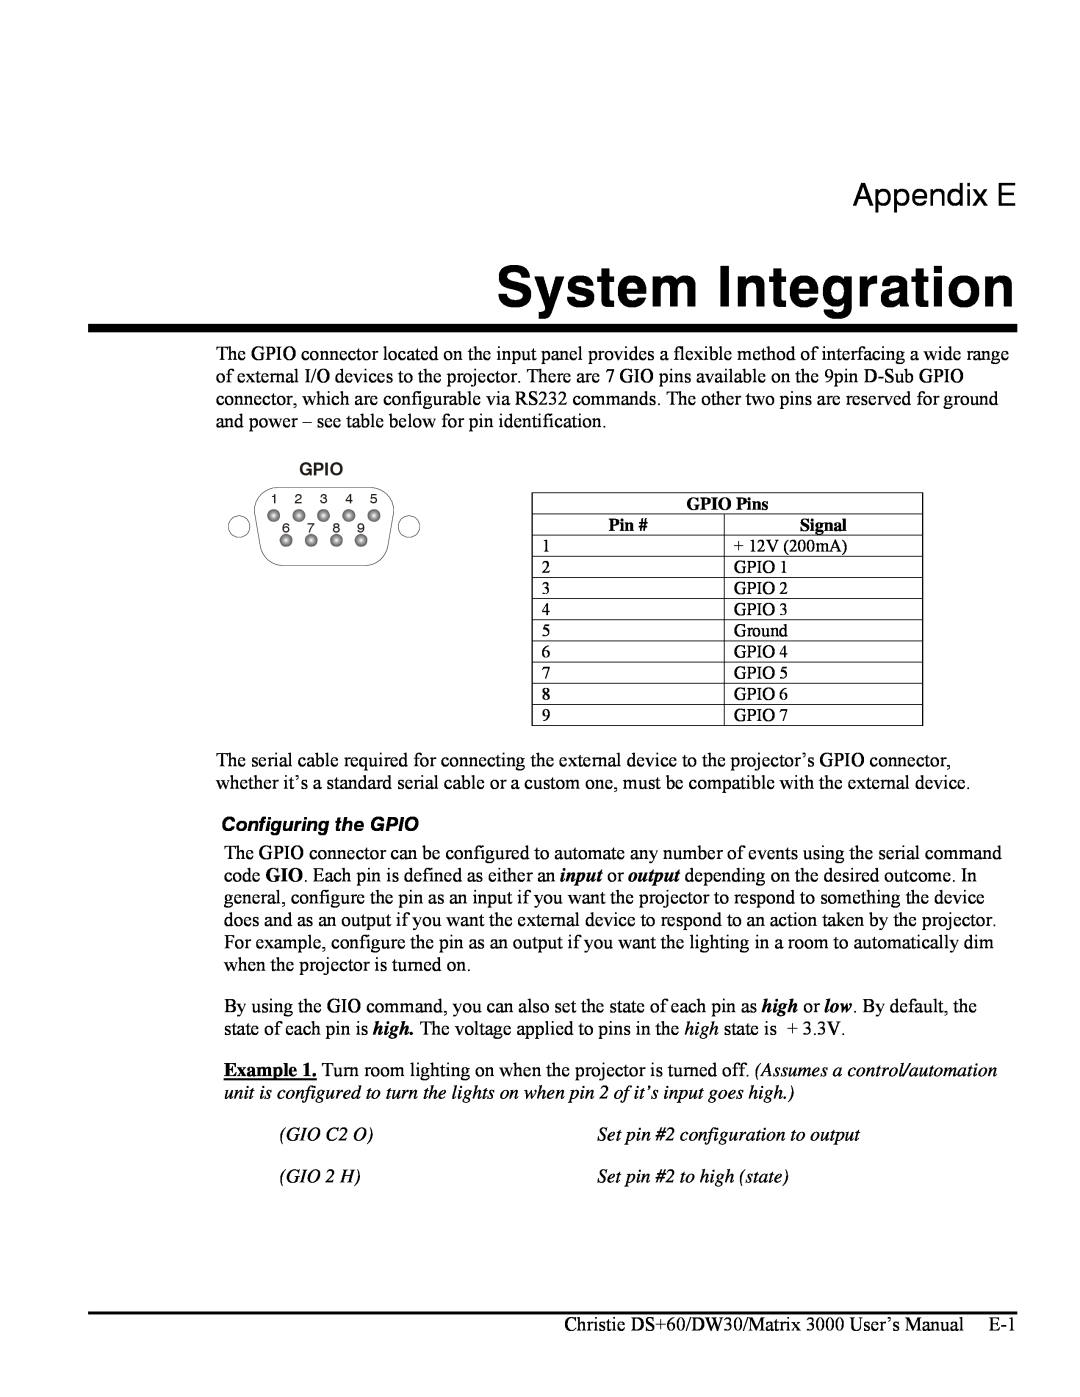 Texas Instruments MATRIX 3000, DW30 user manual System Integration, Appendix E, Configuring the GPIO, GIO C2 O, GIO 2 H 